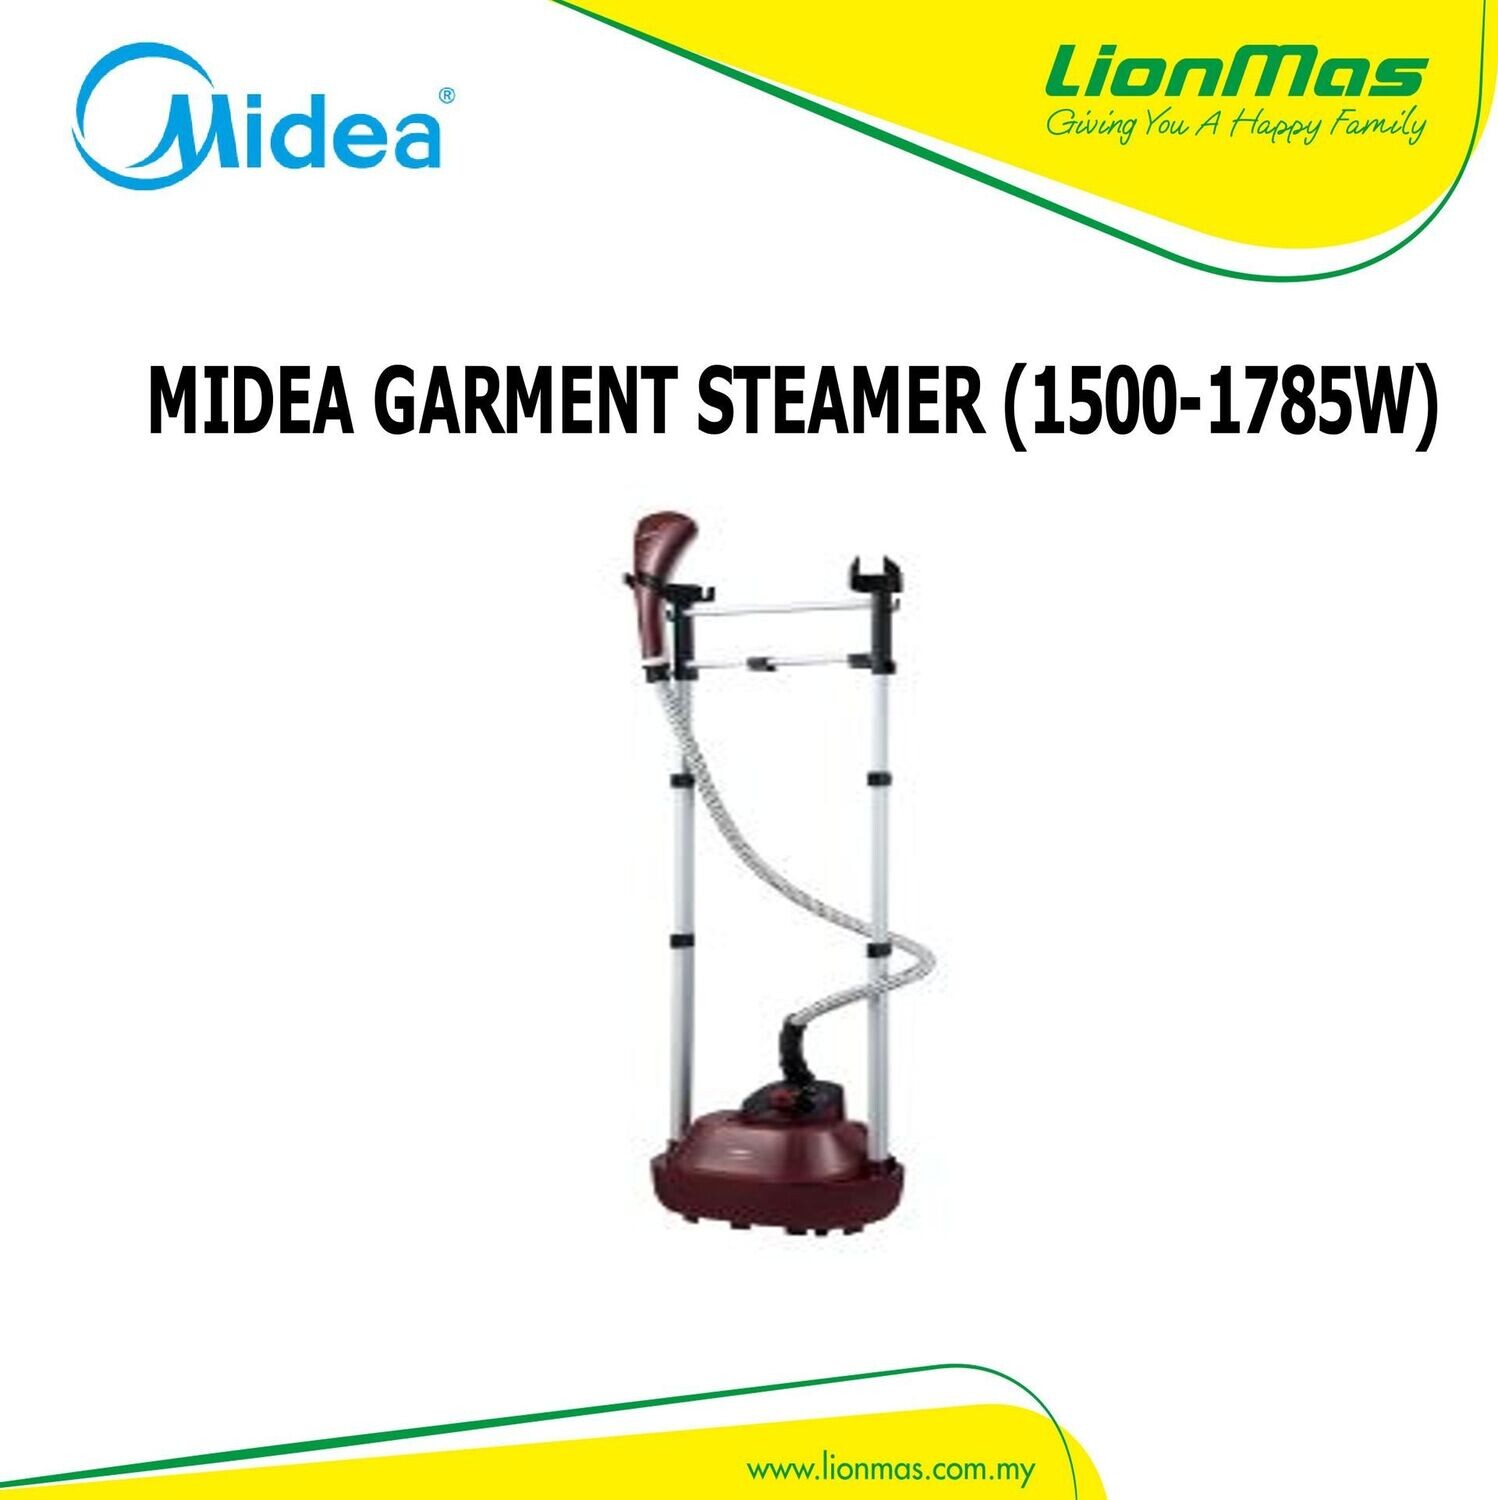 MIDEA GARMENT STEAMER (1500-1785W) 35G STEAM GS-120D